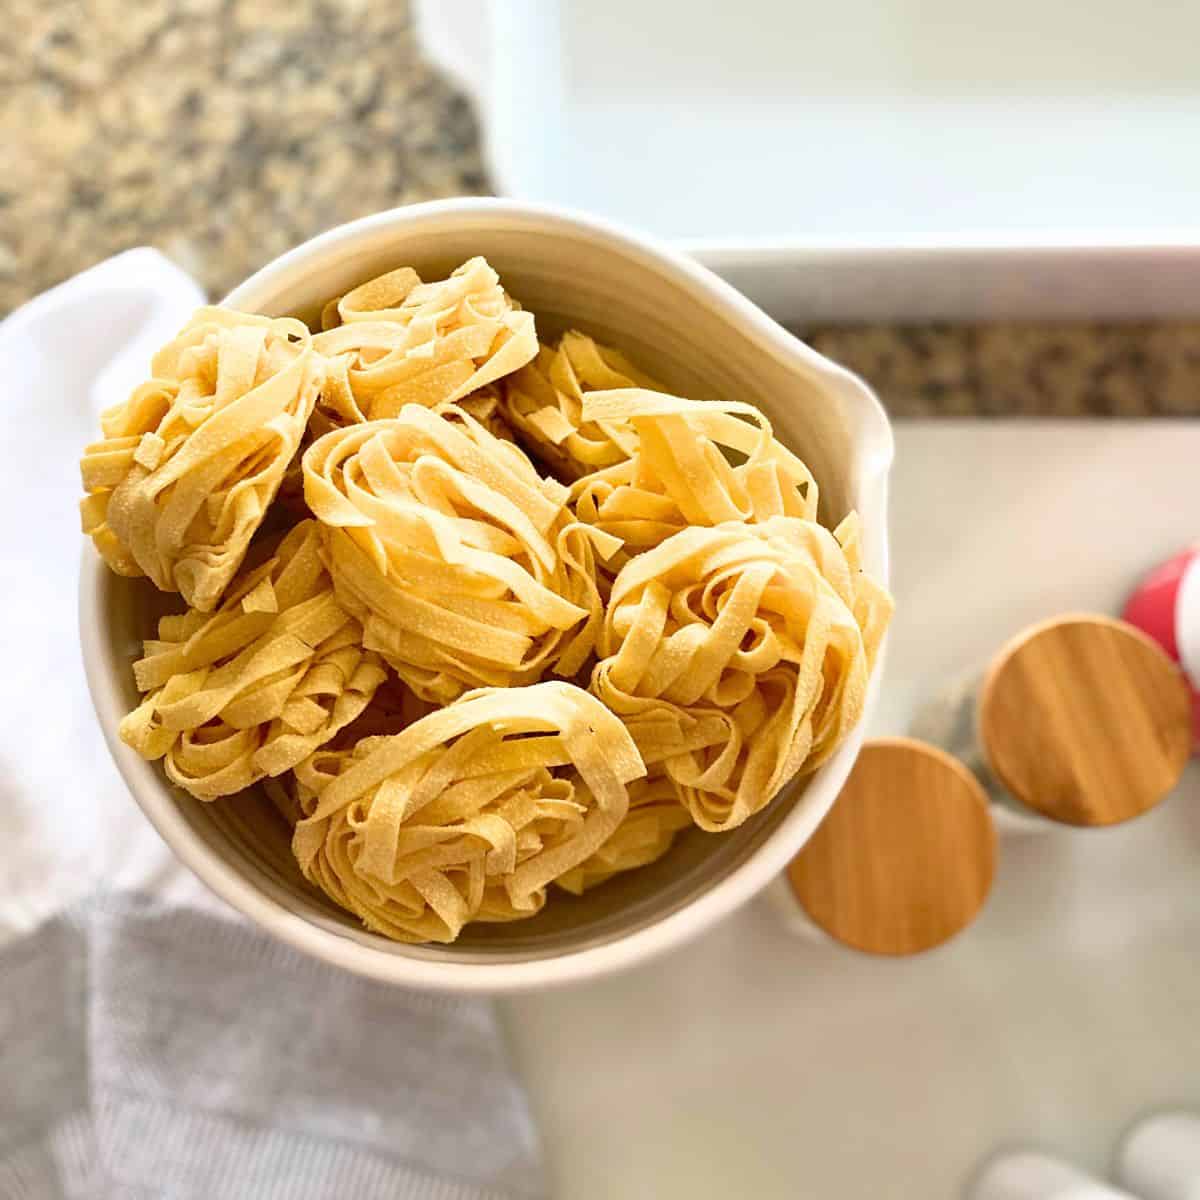 Fettuccine pasta nests in ceramic mixing bowl